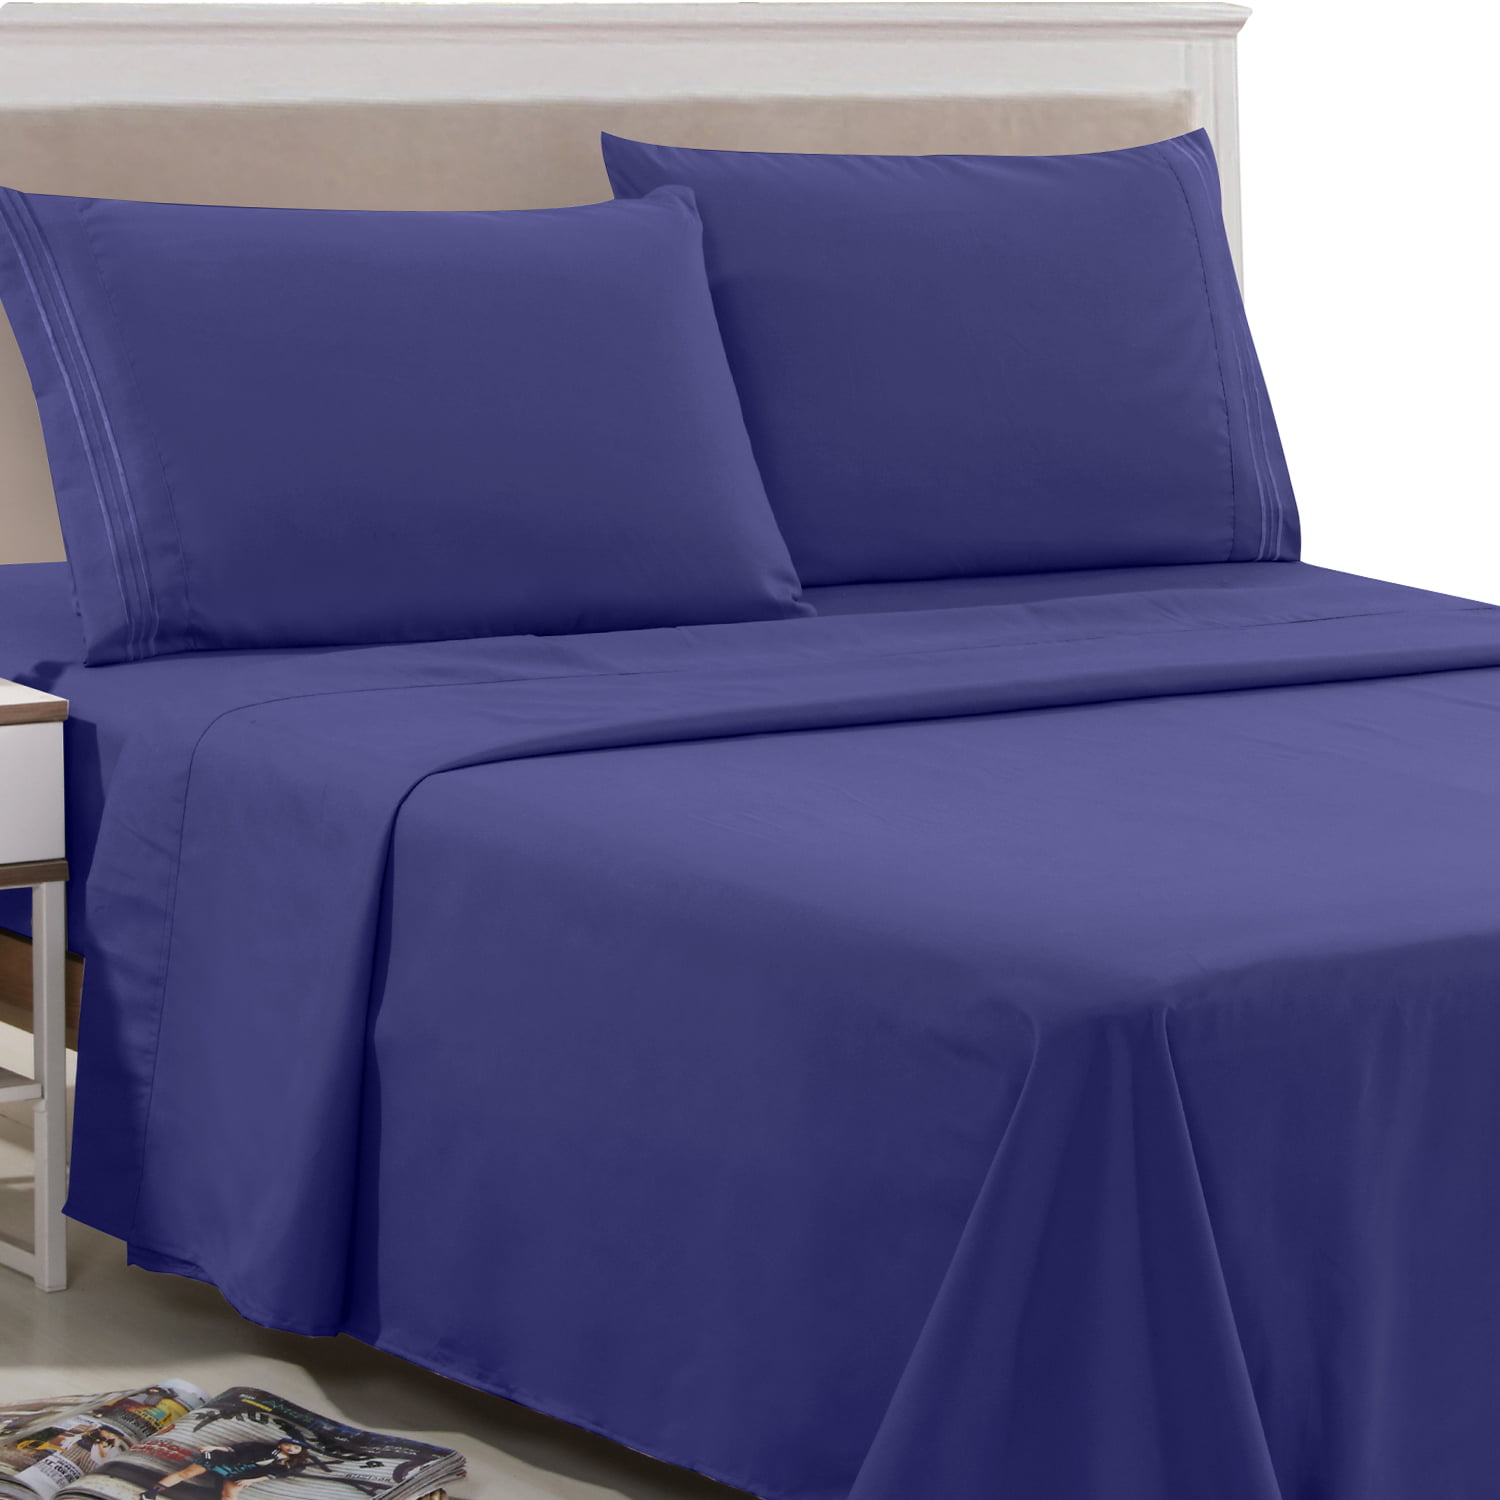 Details about   Fabulous Bedding Collection Egyptian Blue Stripe 1200TC Egyptian Cotton UK Sizes 